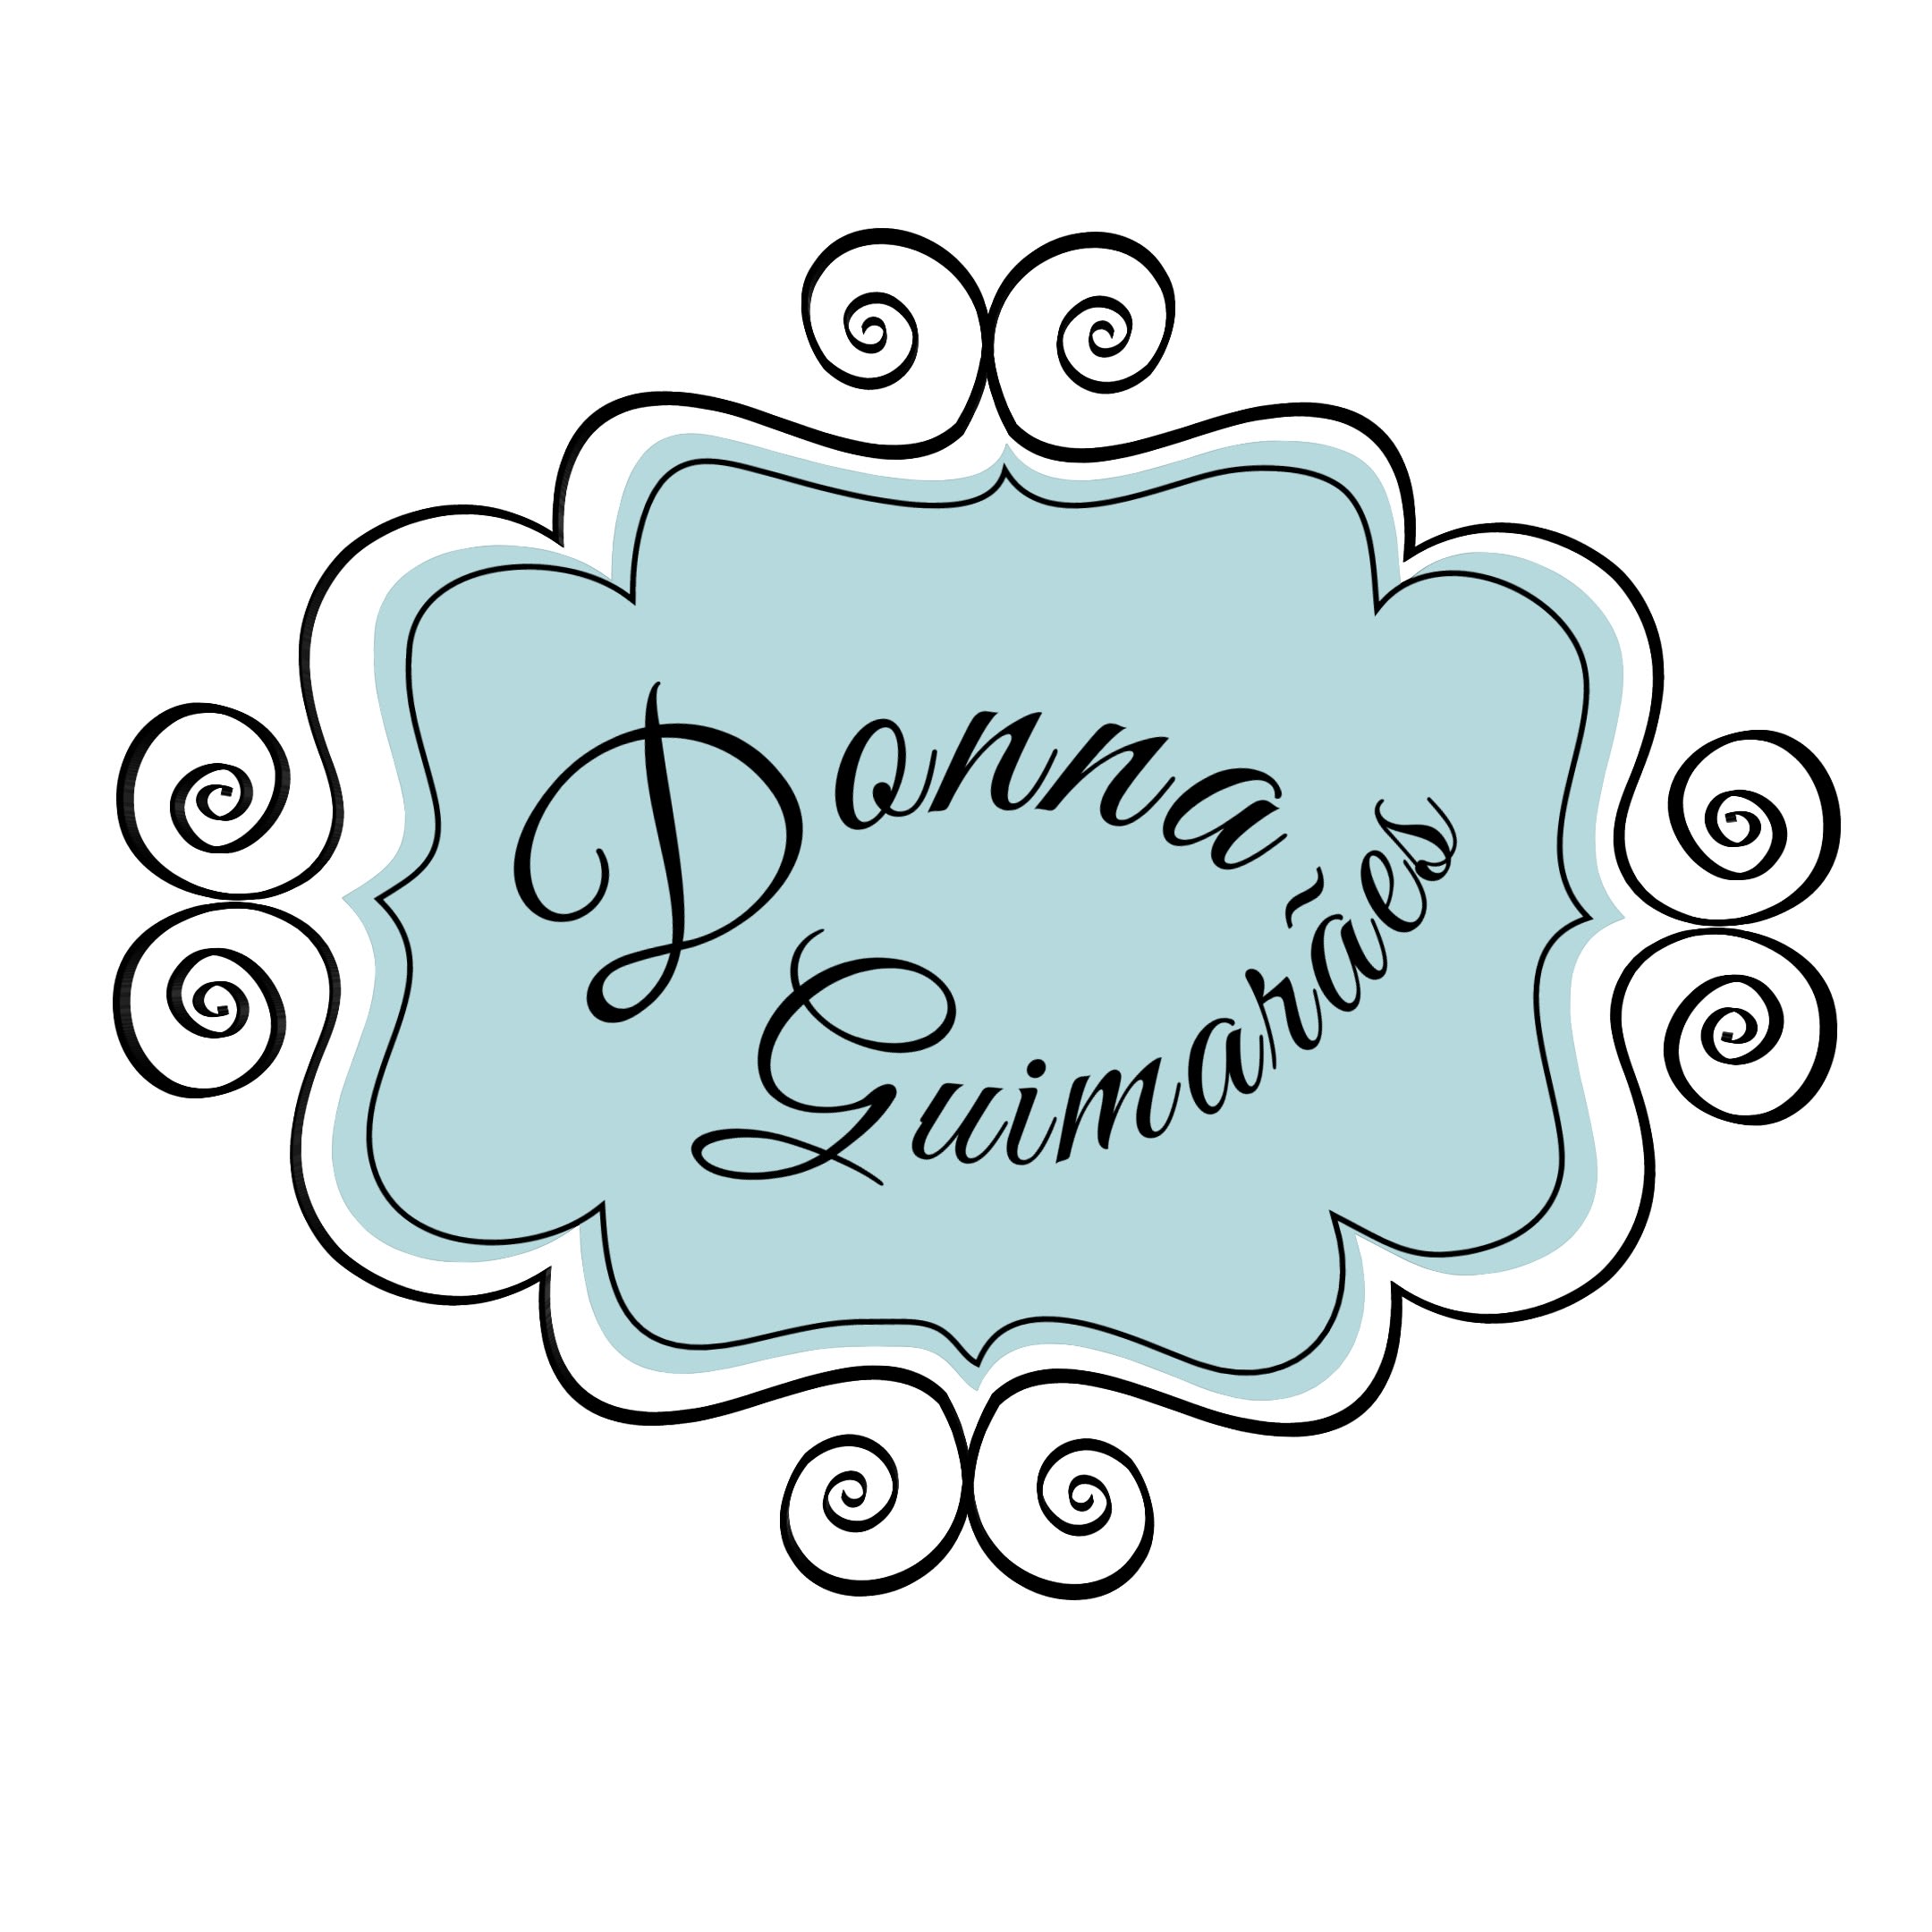 Donna Guimarães